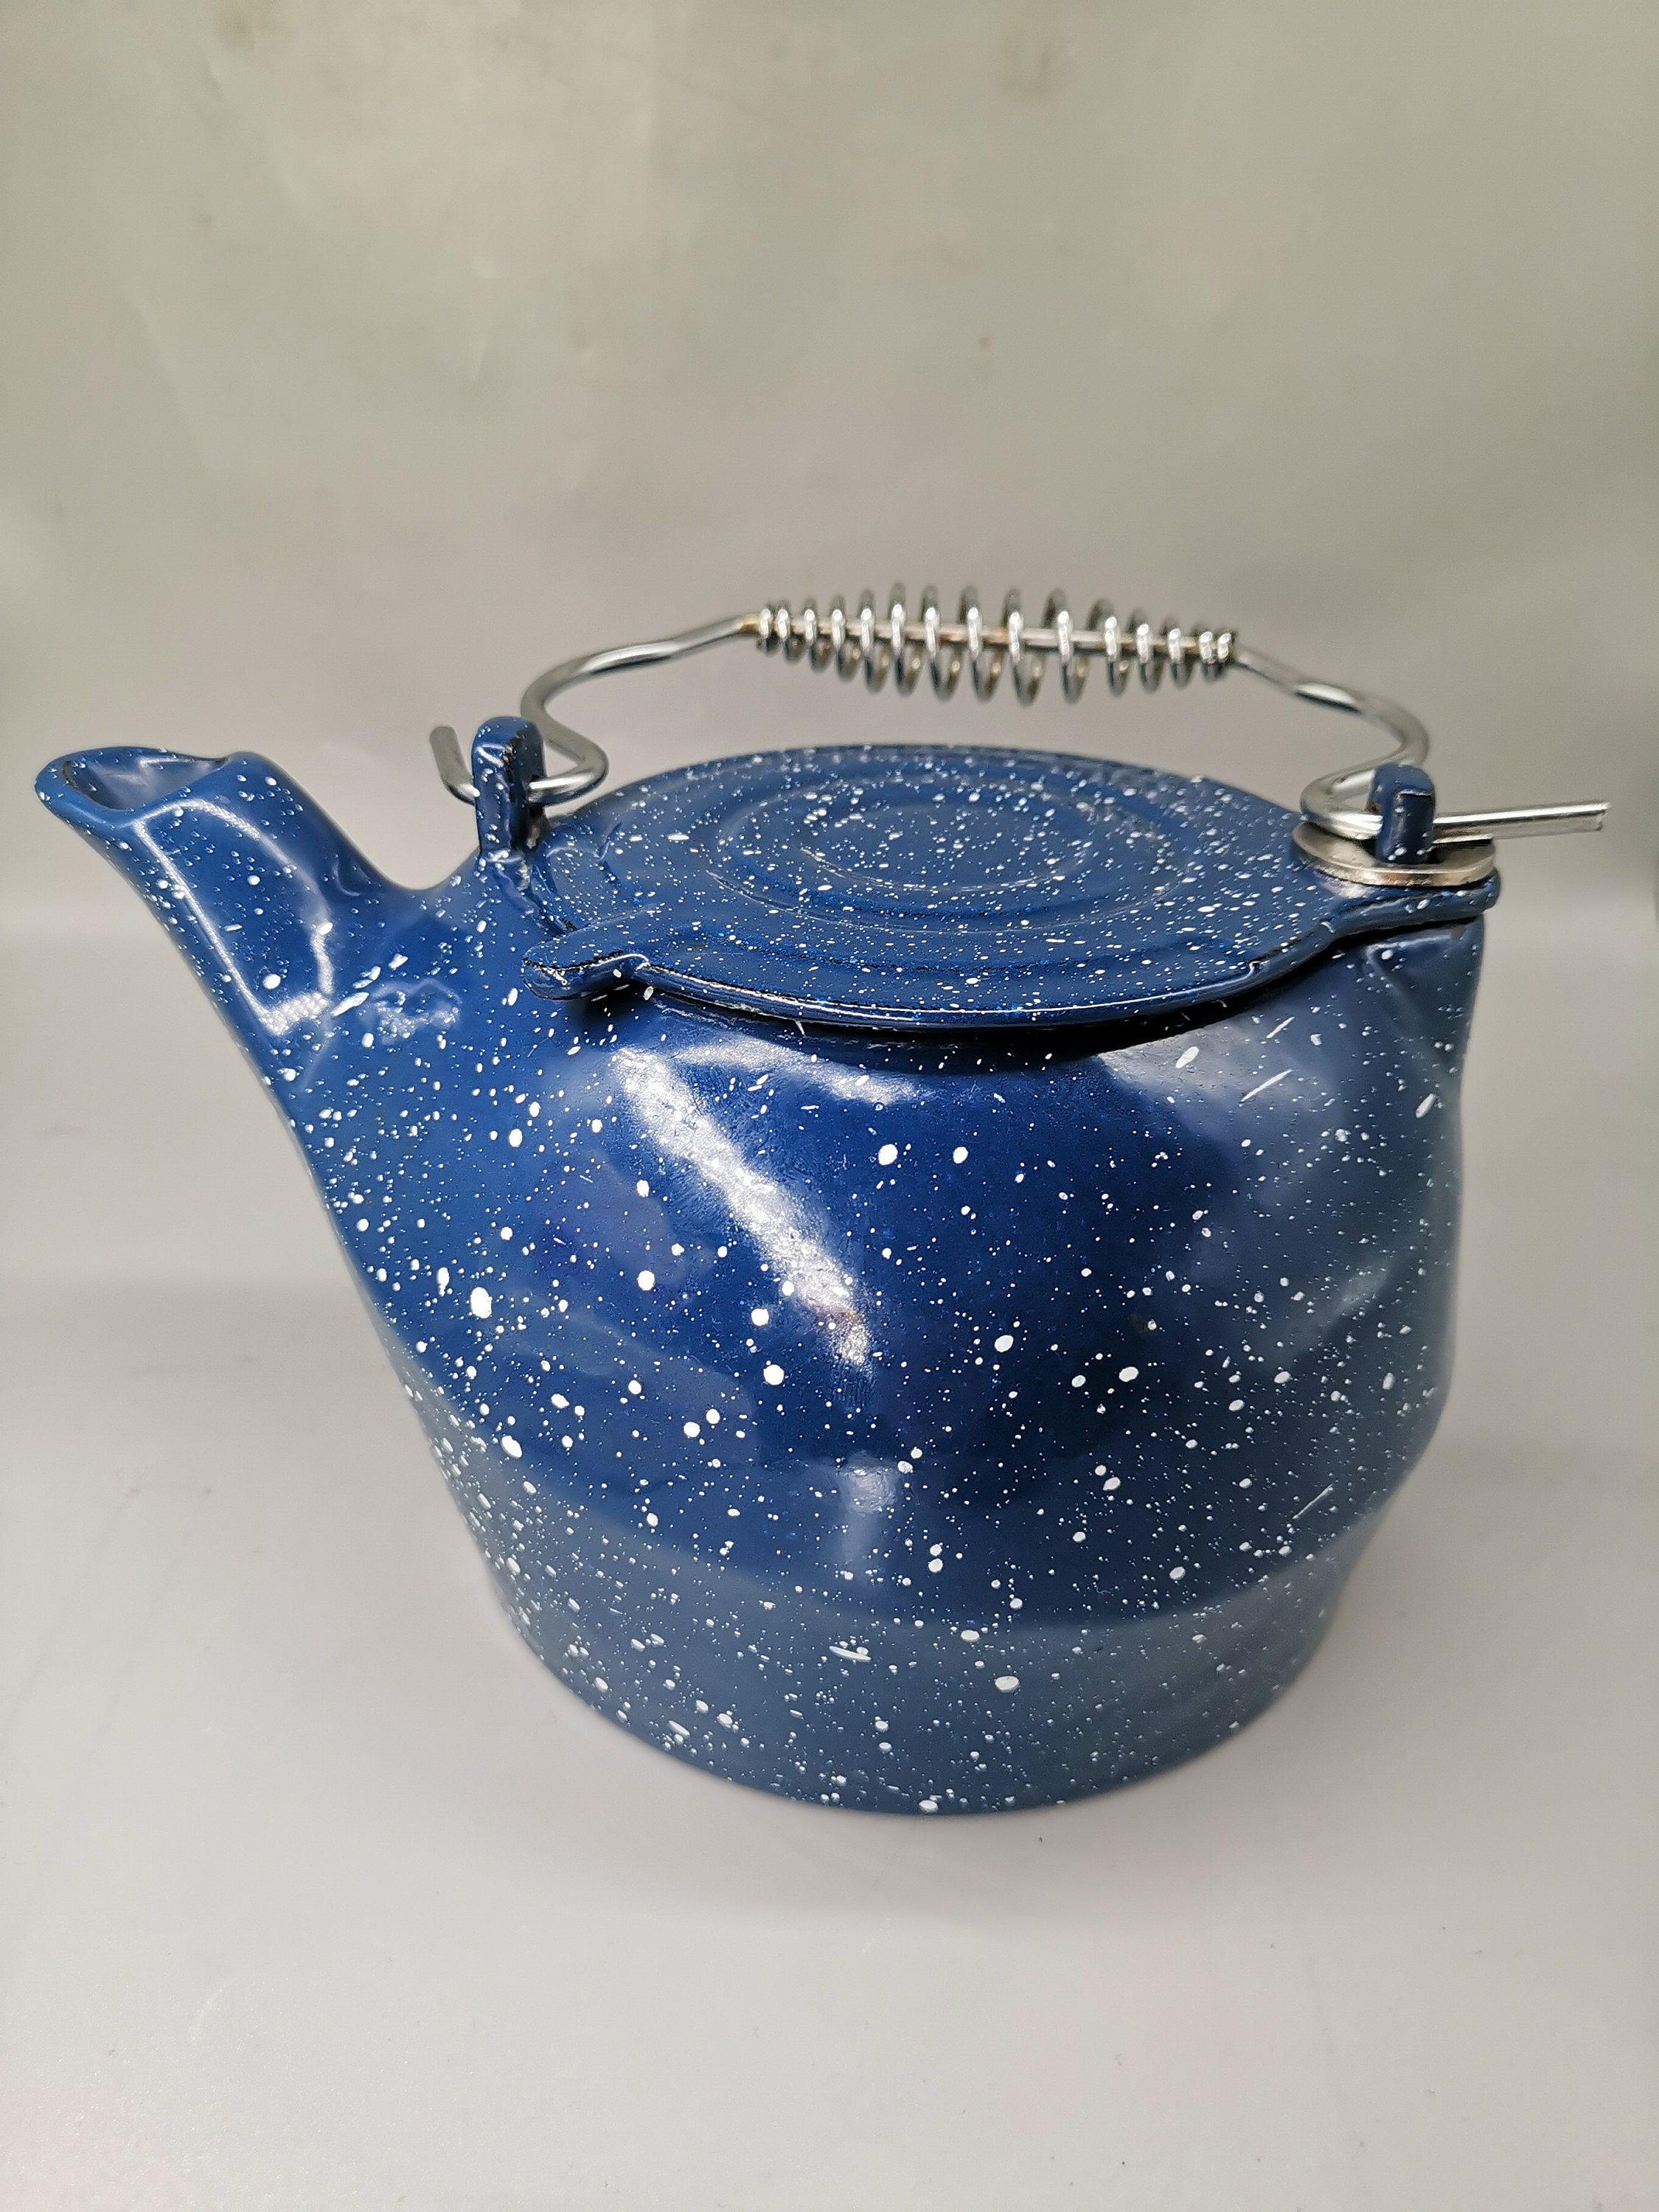 Vtg ORANGE Enamel TEAPOT Made In Poland Enamelware 12 cup Tea Pot Kitchen  Stove Top - Teapots, Facebook Marketplace